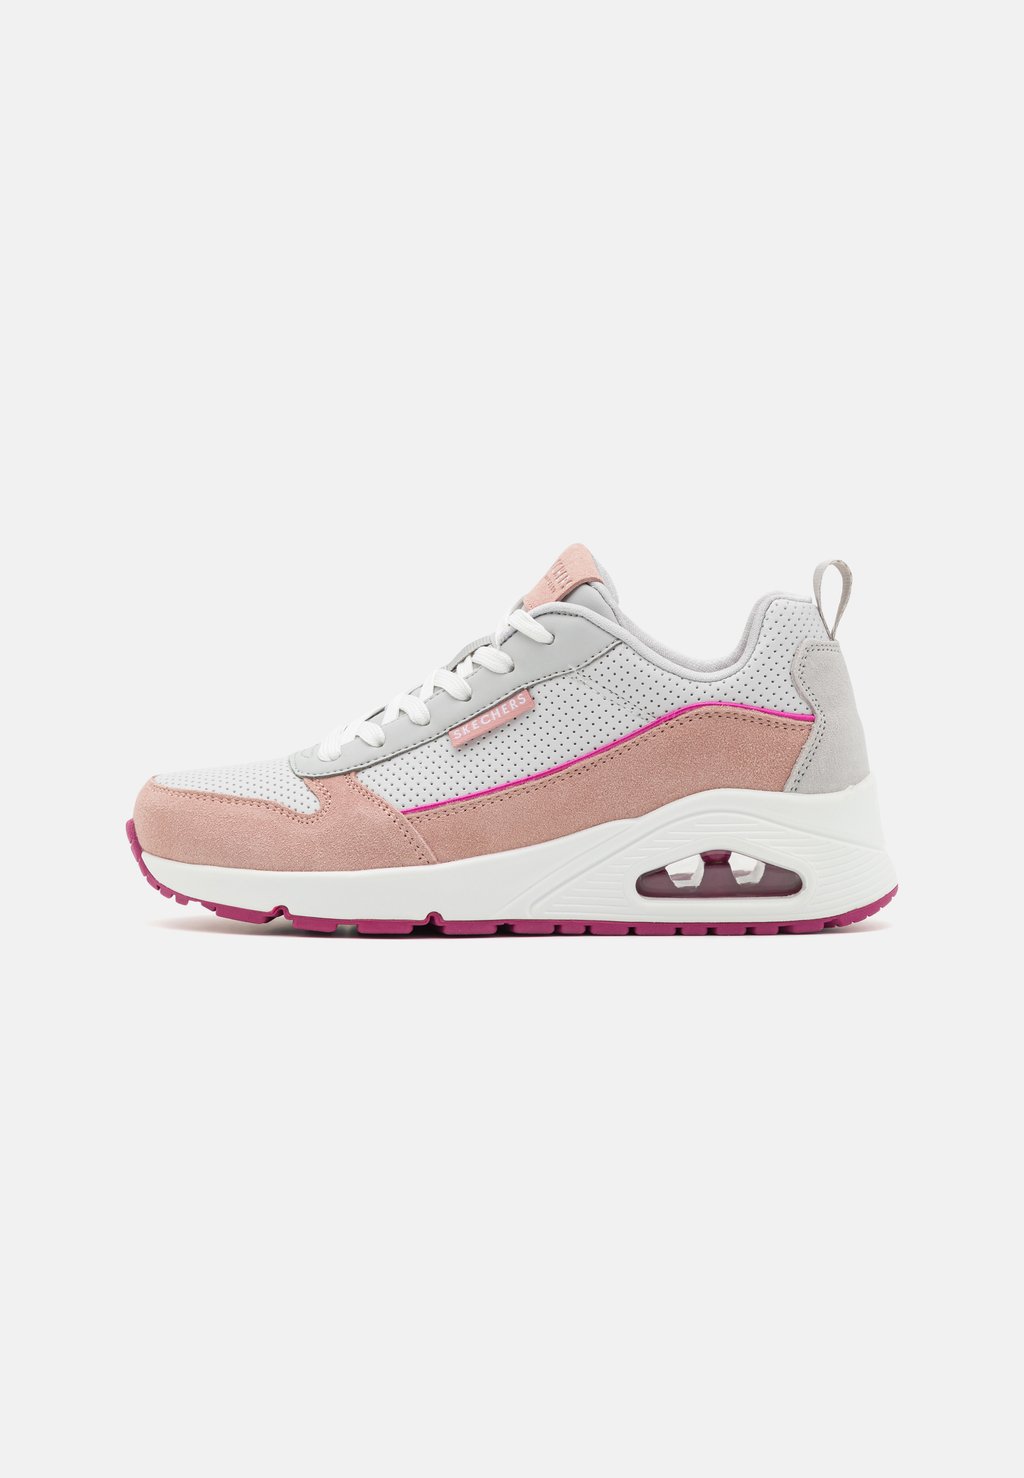 Низкие кроссовки Uno Skechers Sport, цвет pink/white/grey